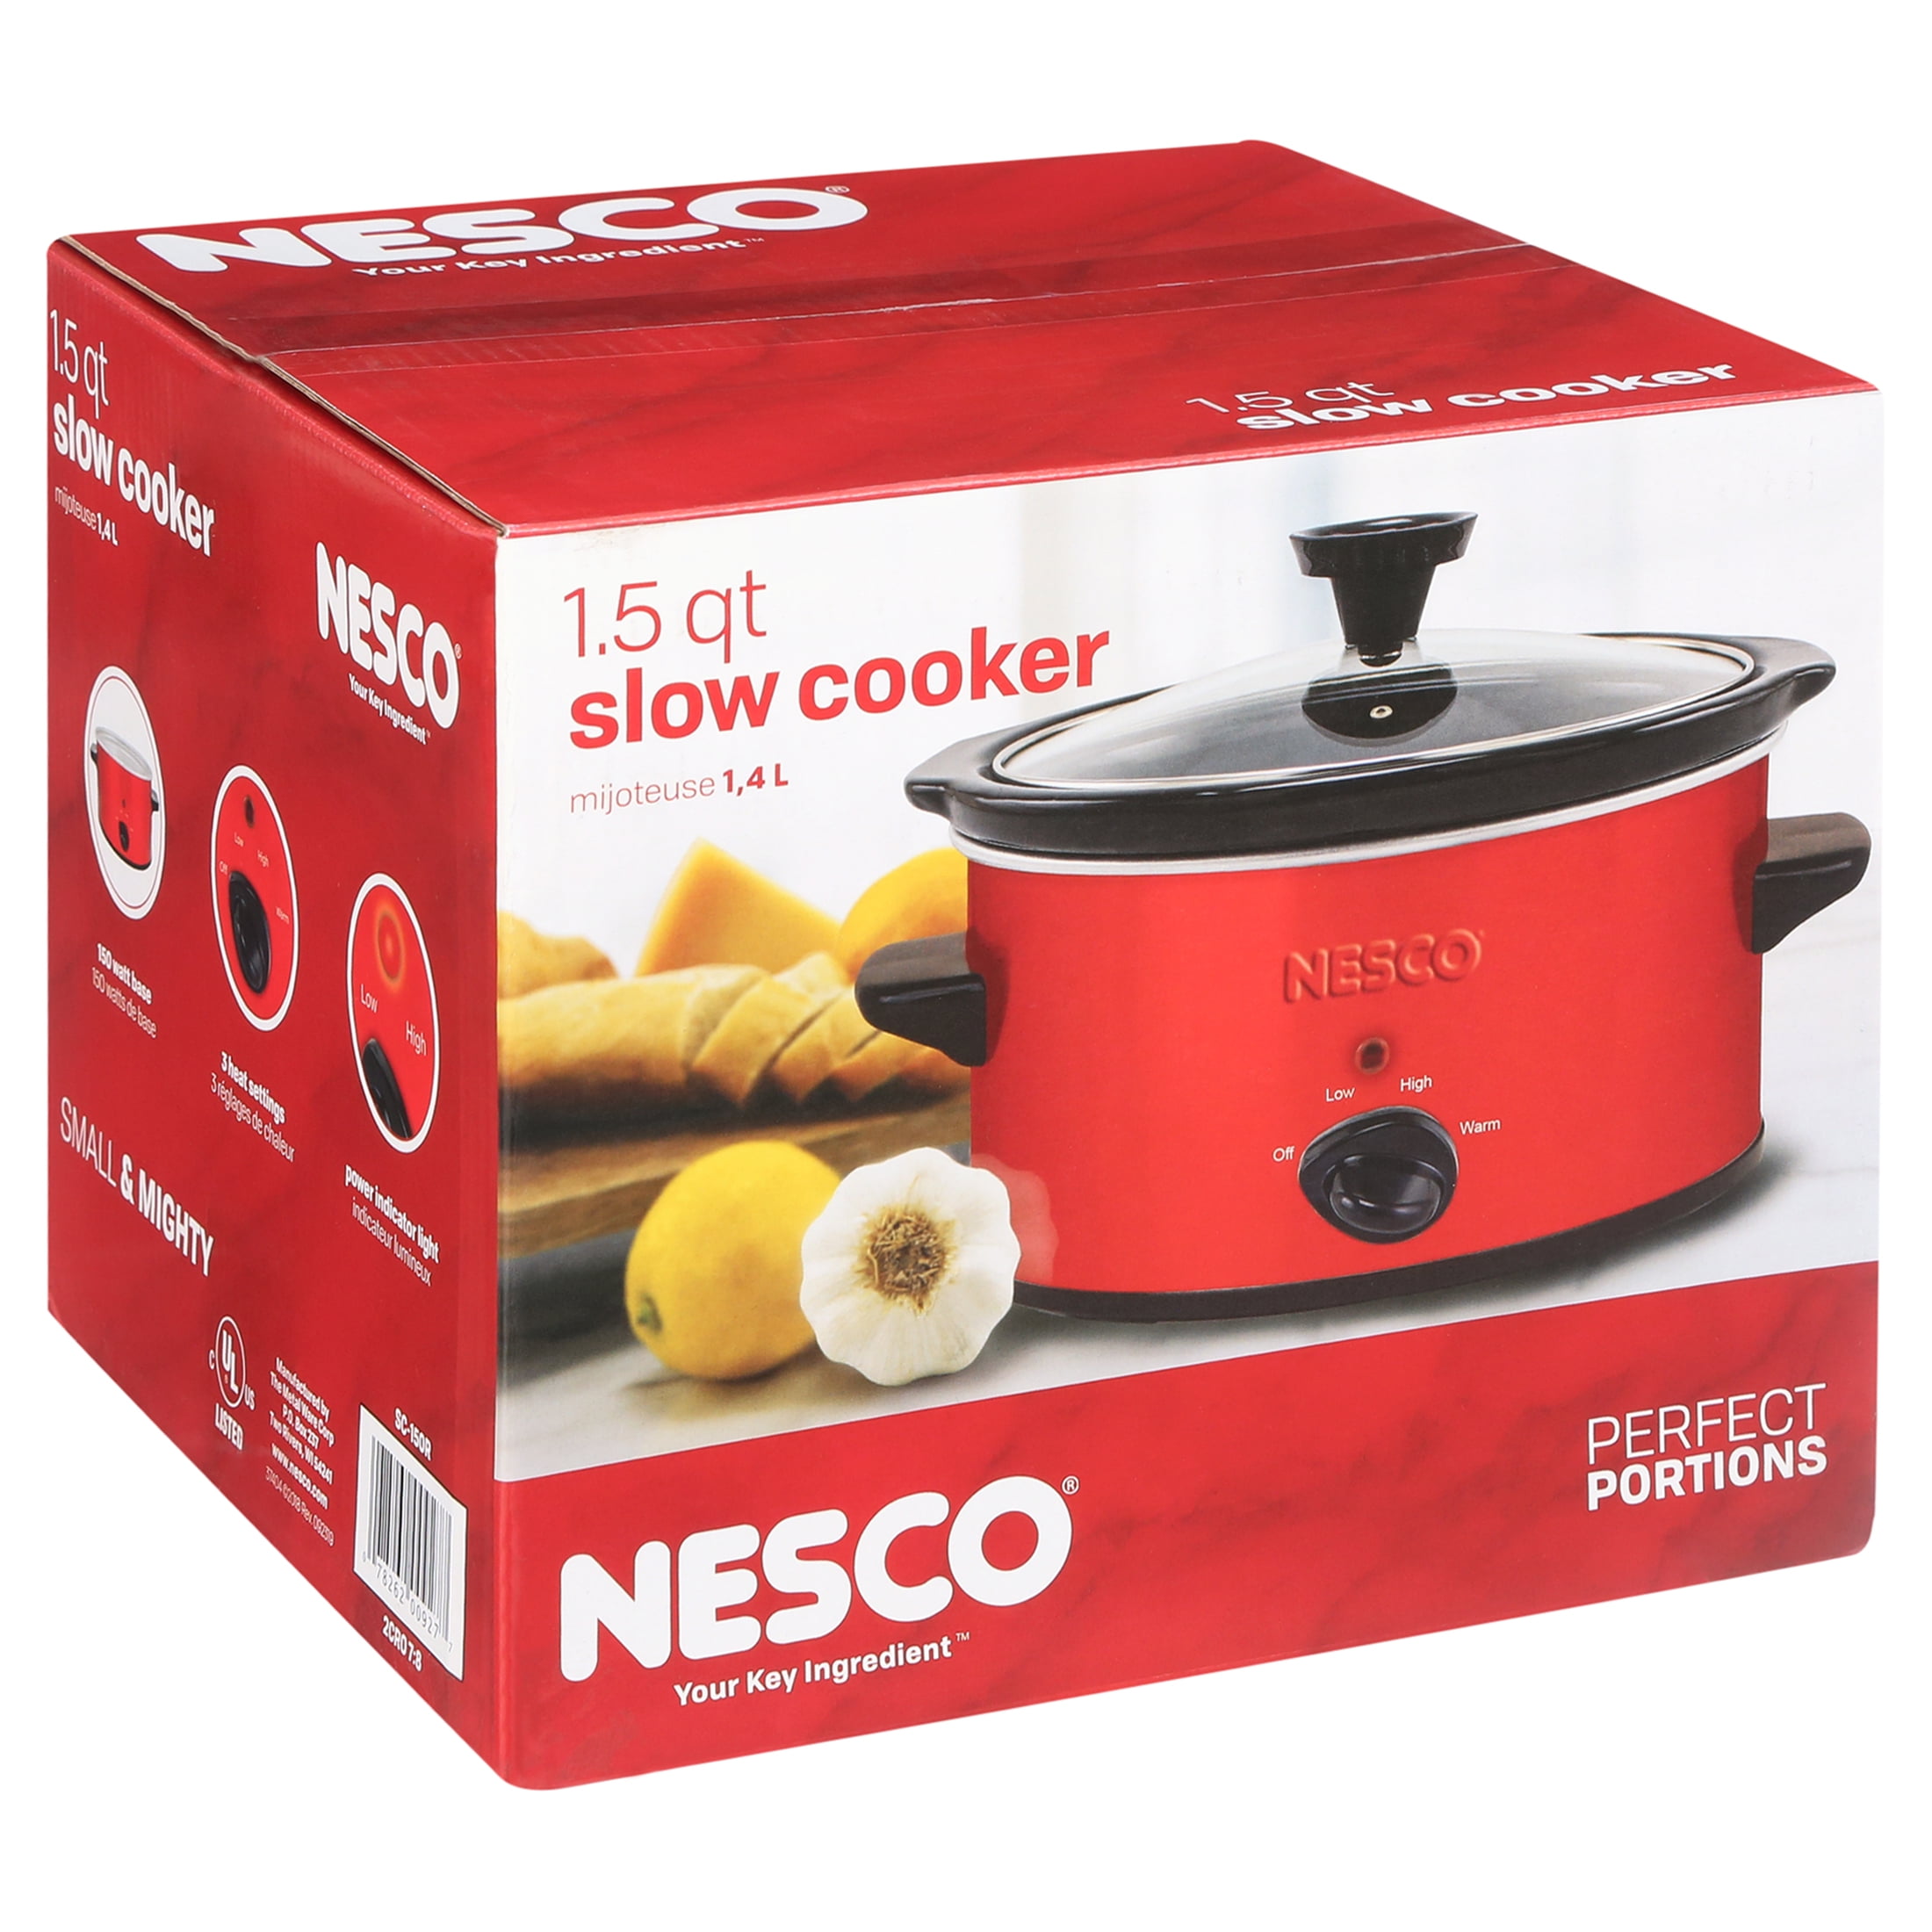 Brentwood Appliances SC-150R 6.5 Quart Slow Cooker (red) 